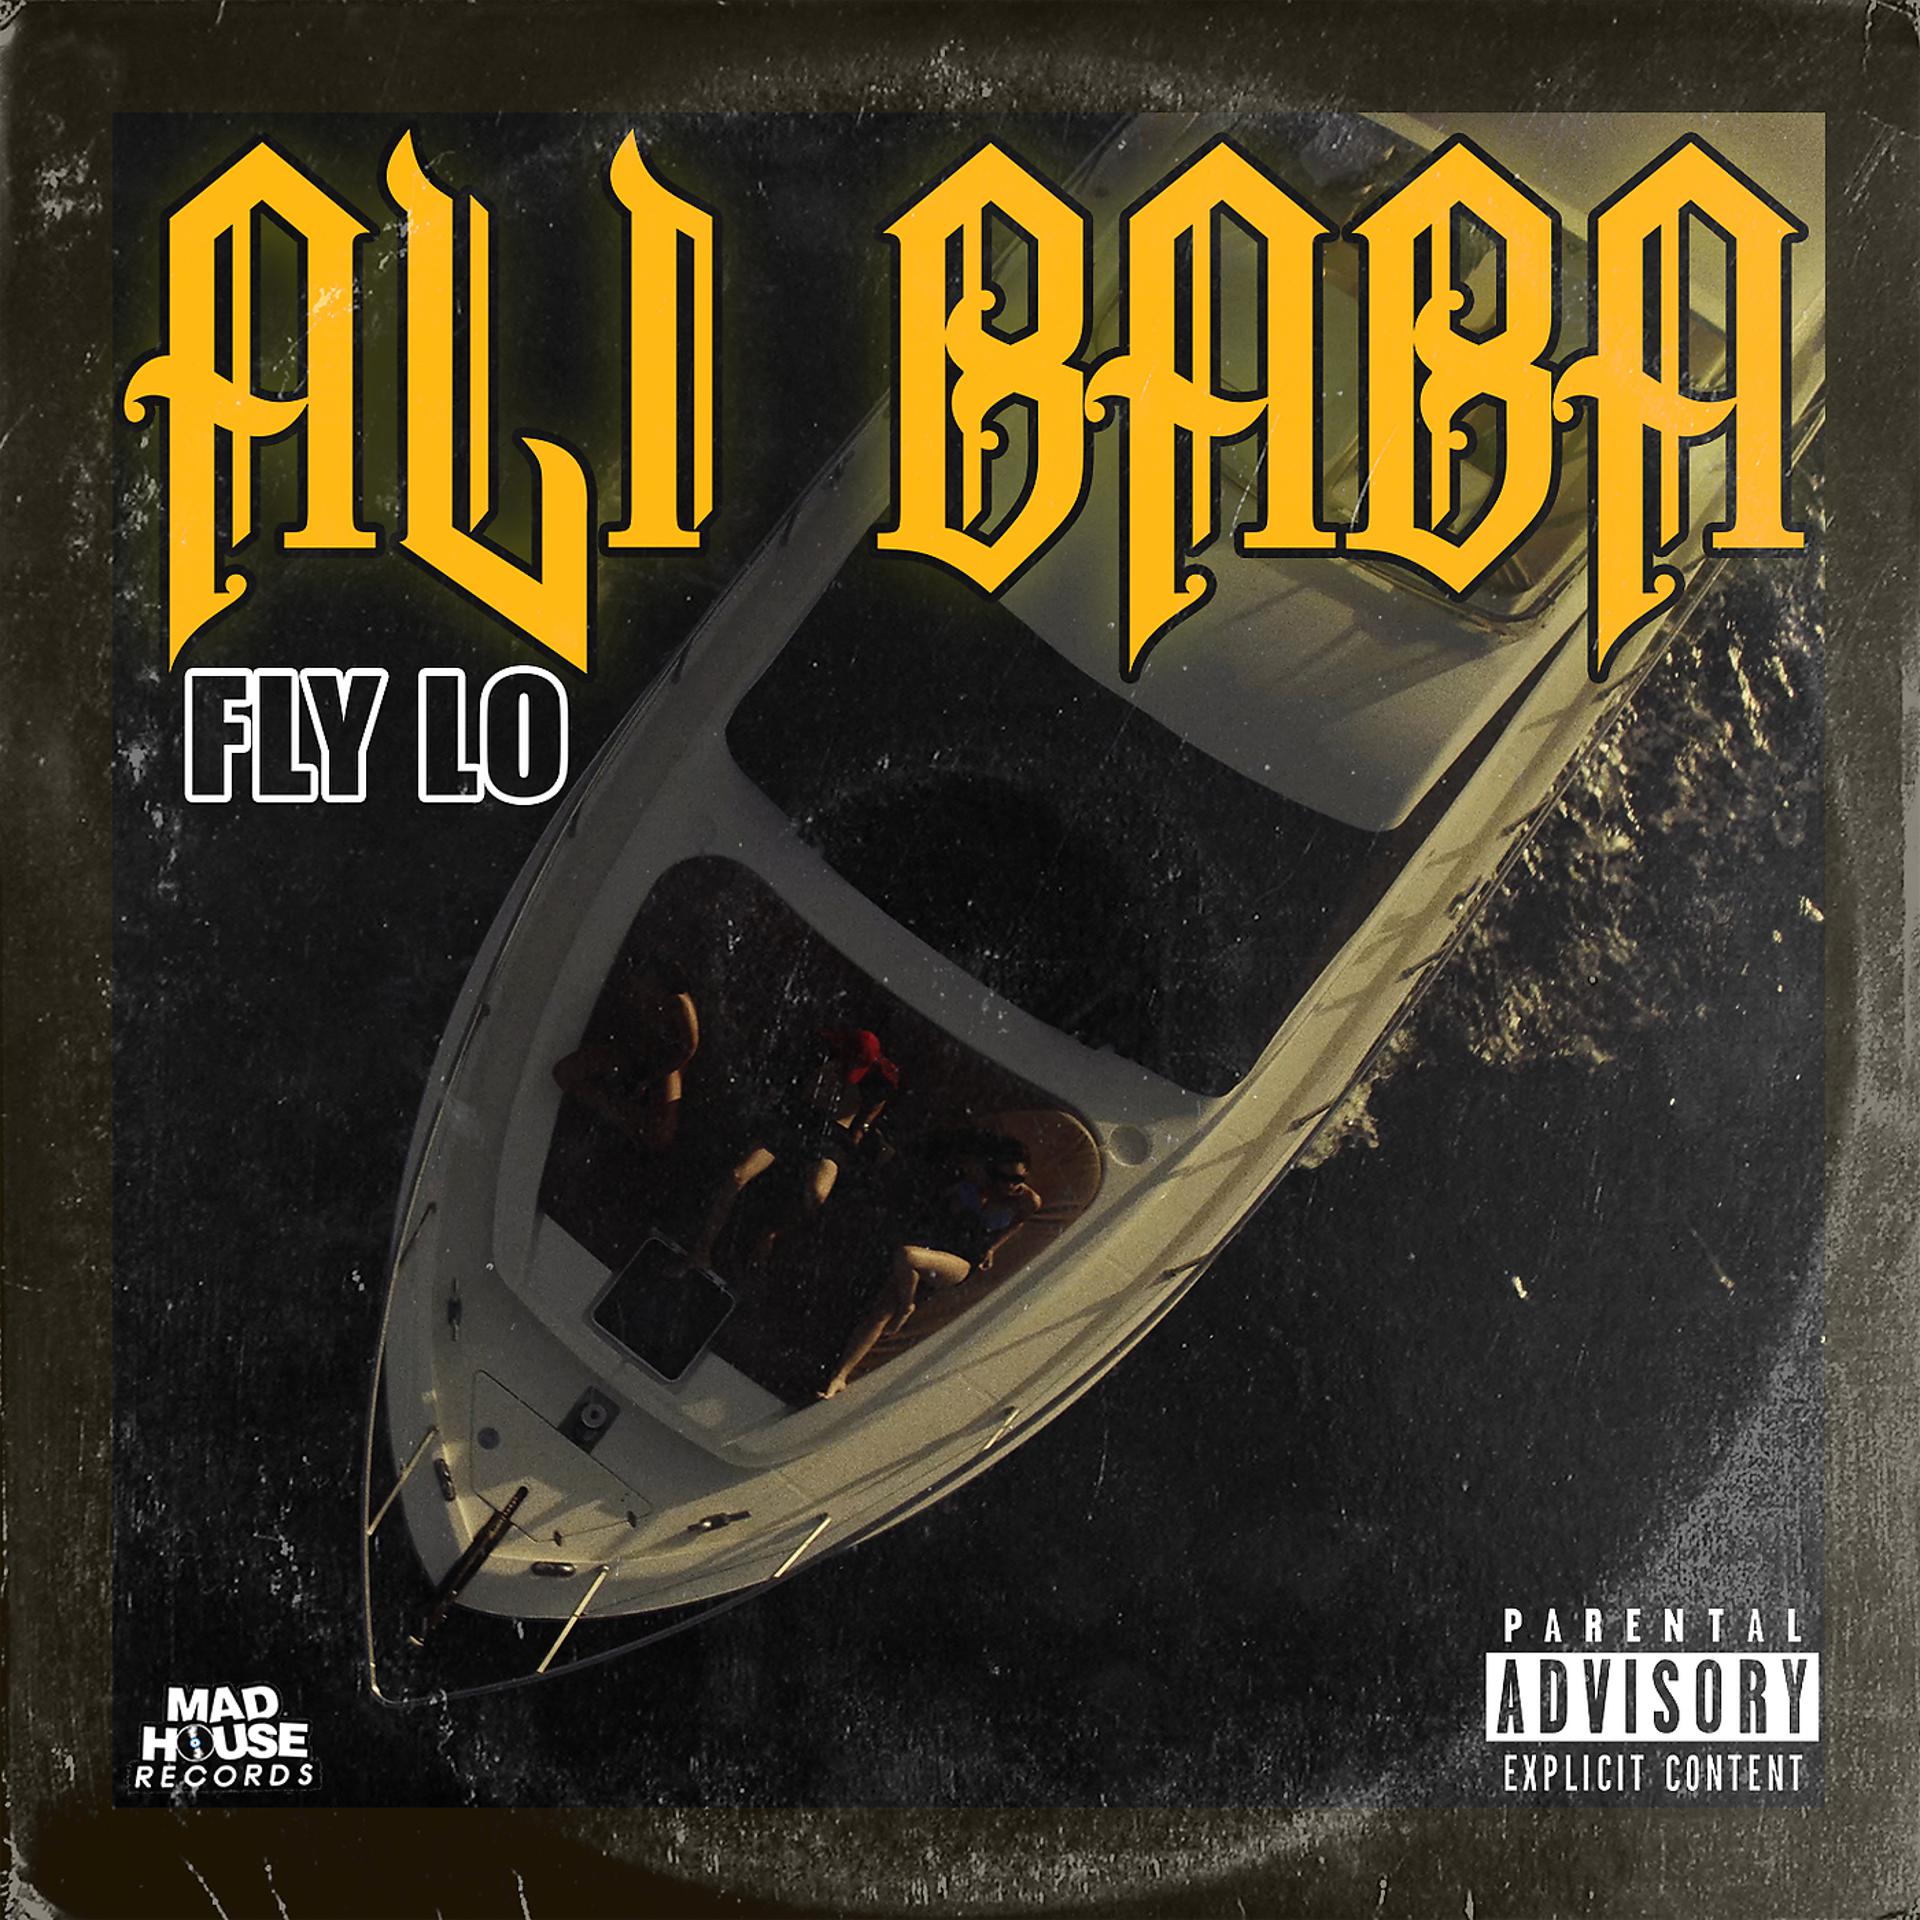 Постер альбома Ali Baba